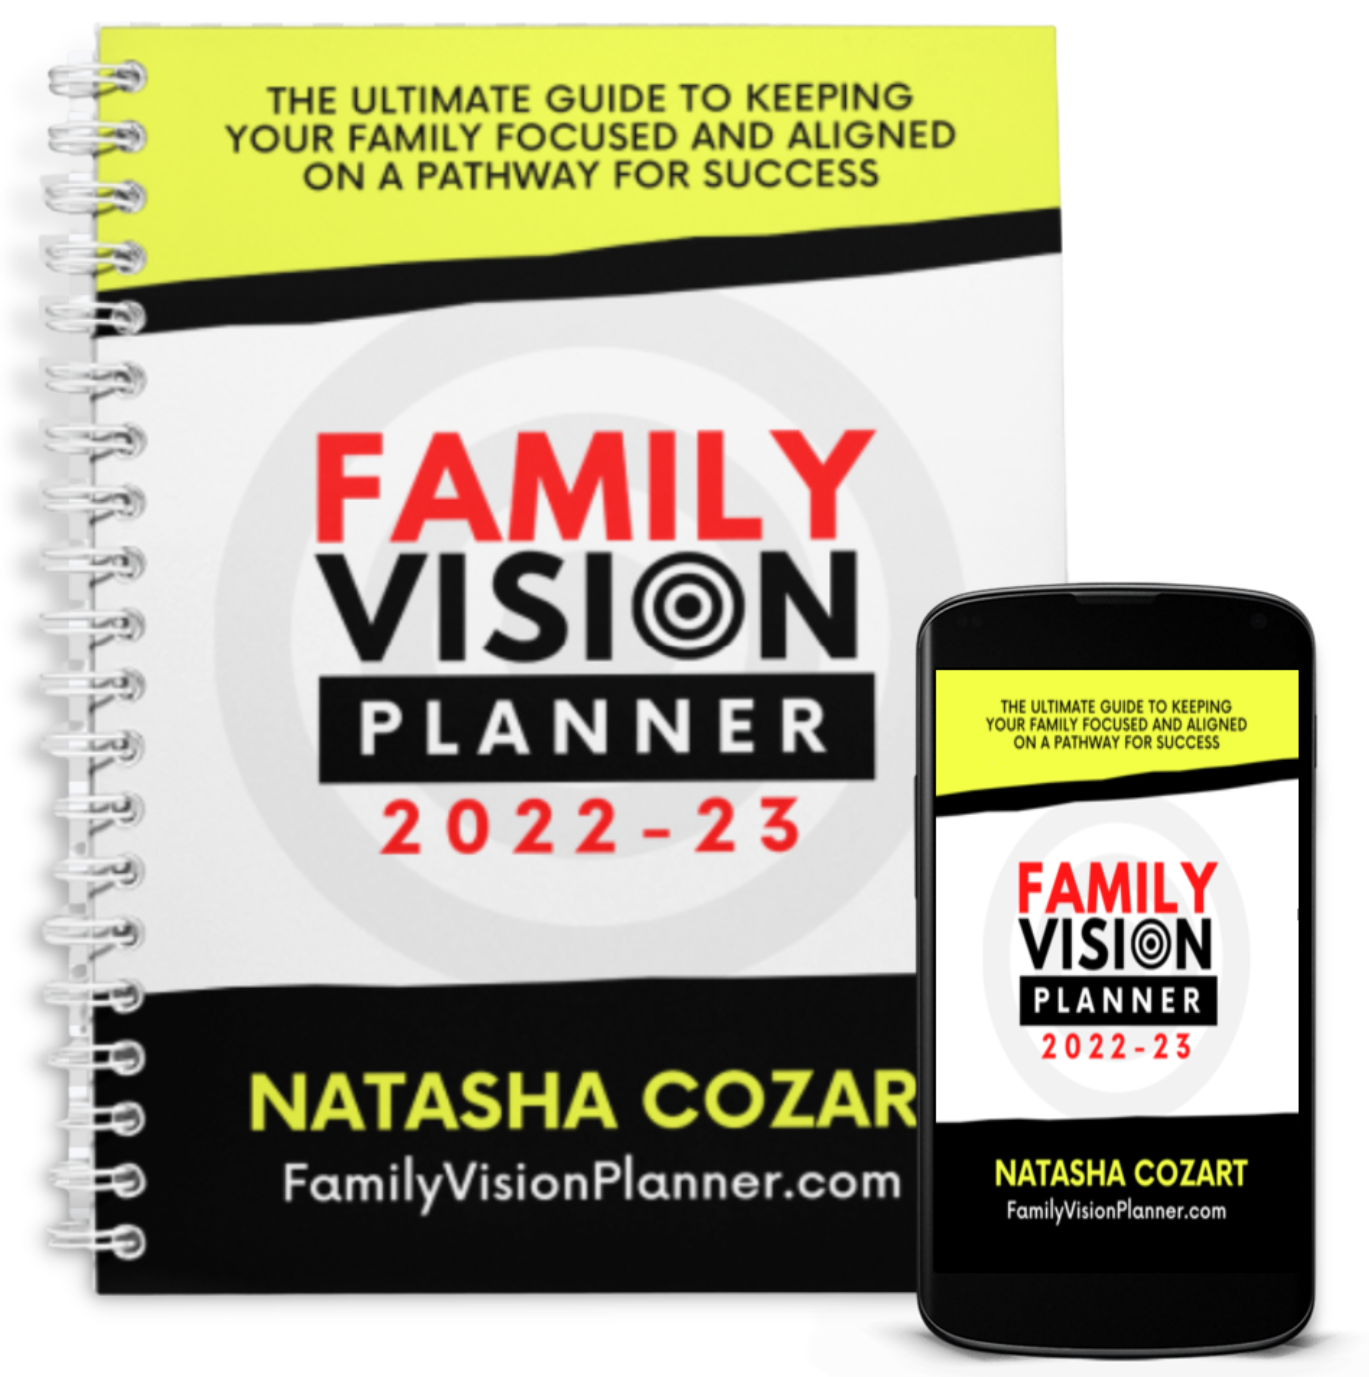 Family Vision Planner by Natasha Cozart